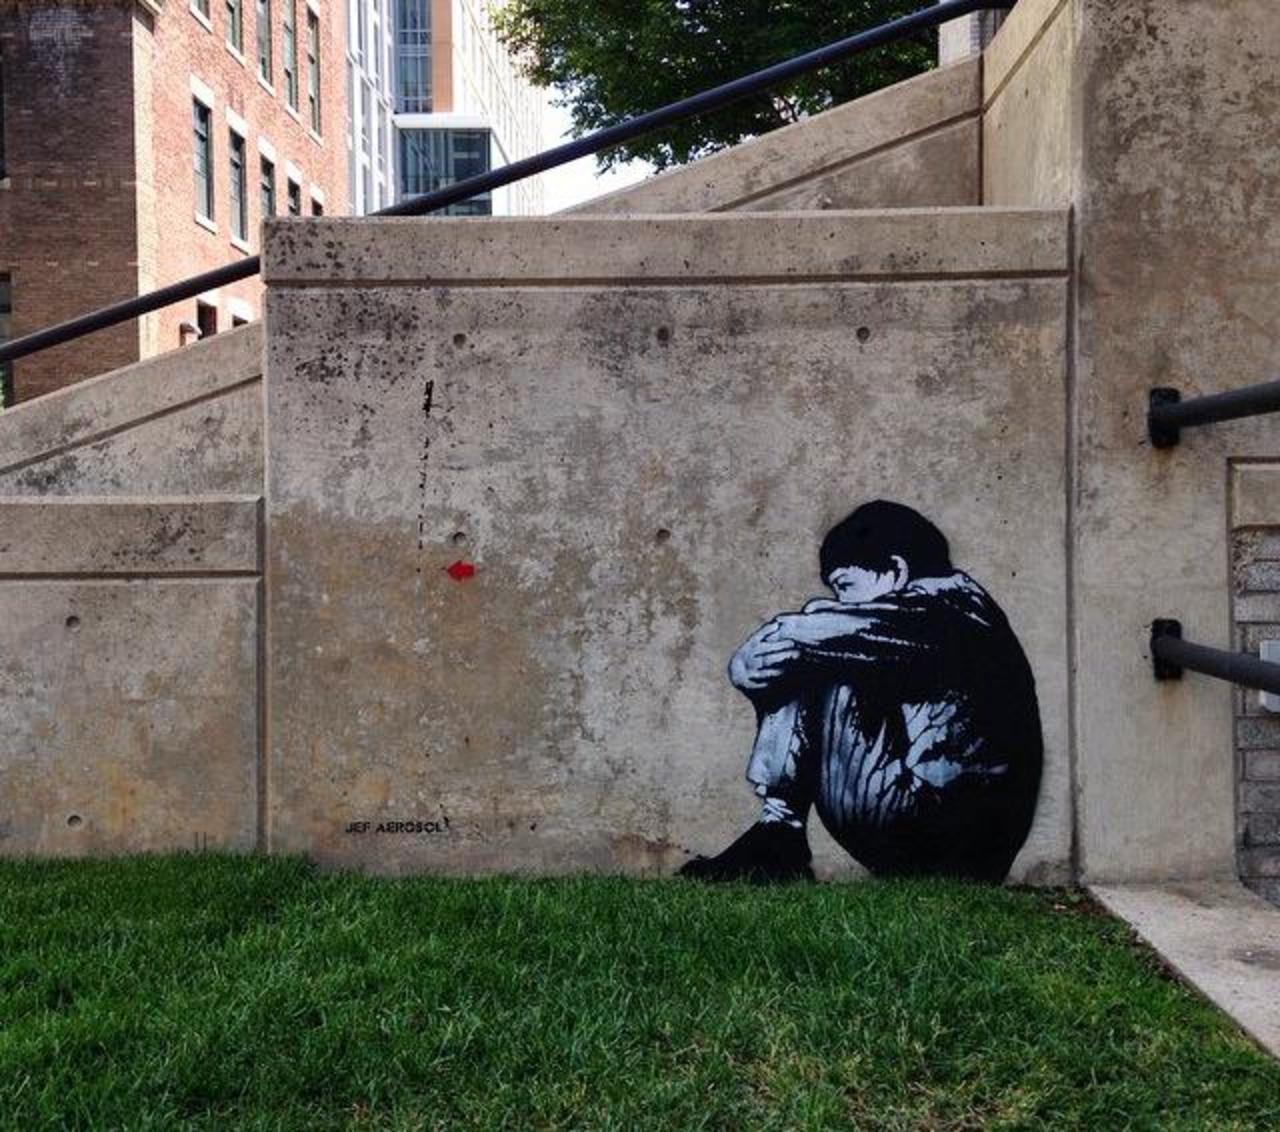 'The Sitting Kid'
Street Art by Jef Aerosol in Boston

#art #arte #graffiti #streetart http://t.co/duUHSlTKKf